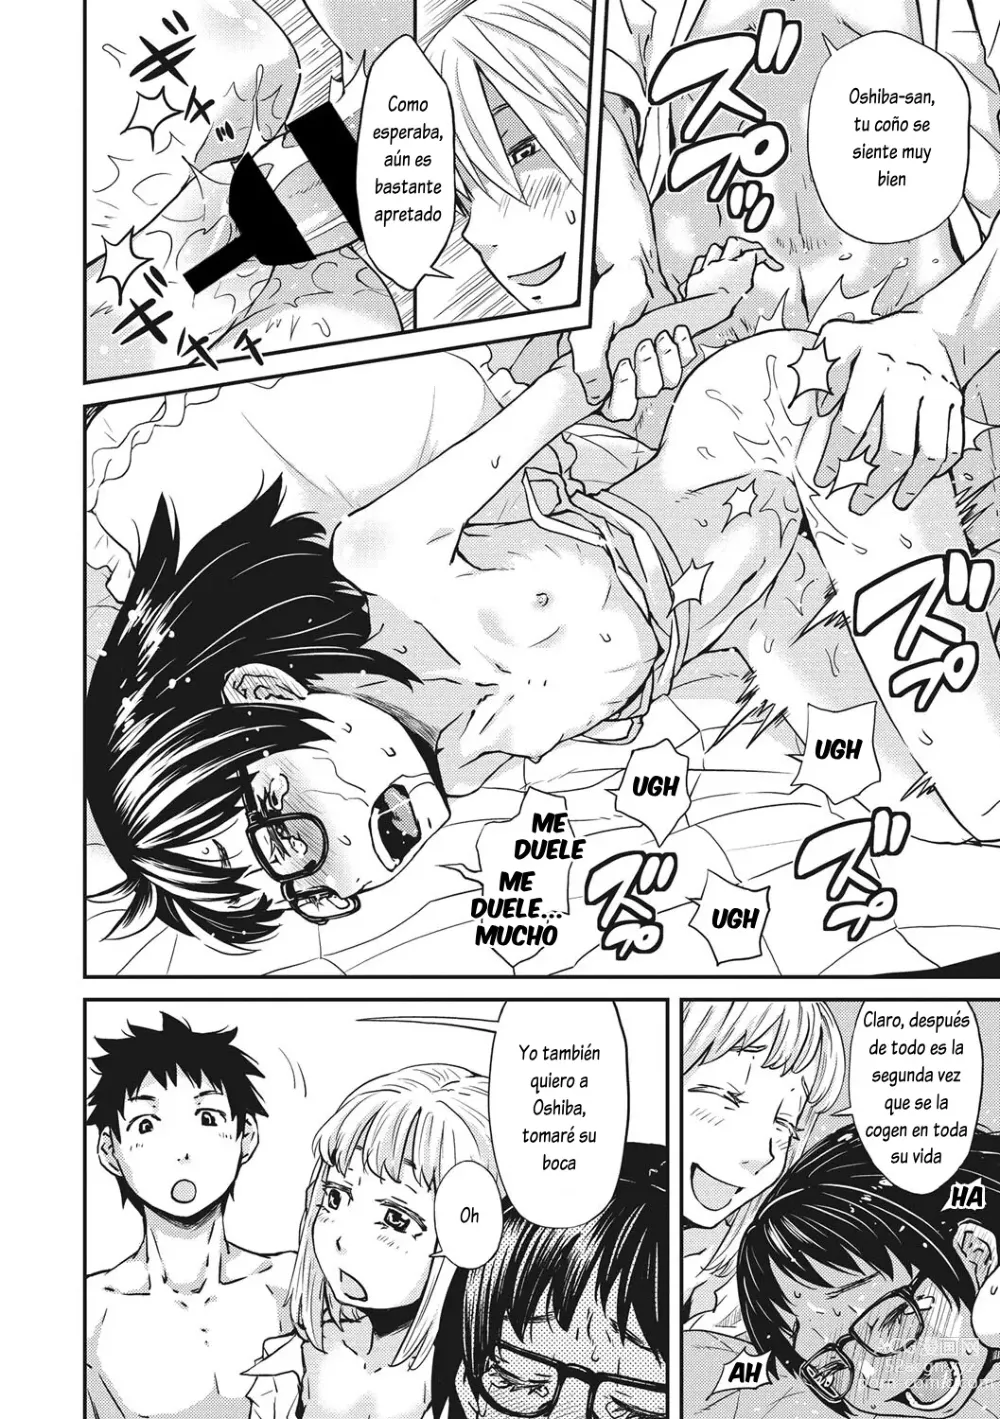 Page 4 of manga Oshiete Ooshiba-san Kouhen